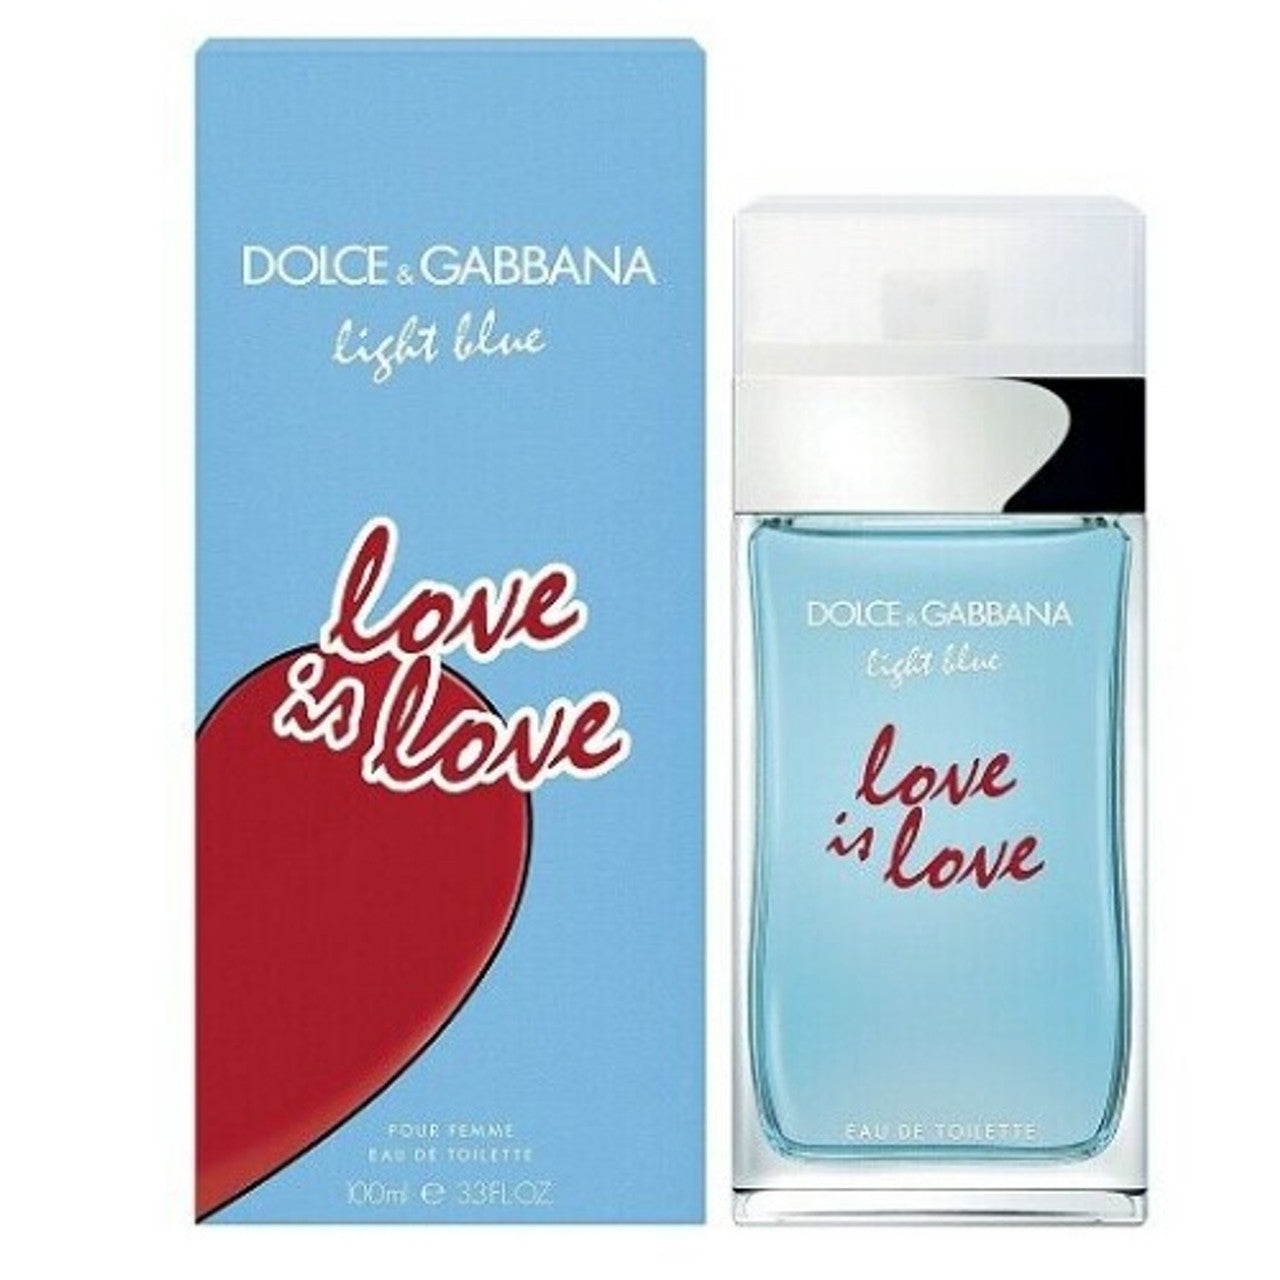 Light Blue Love is Love By Dolce & Gabbana For Women 3.3 oz EDT Spray